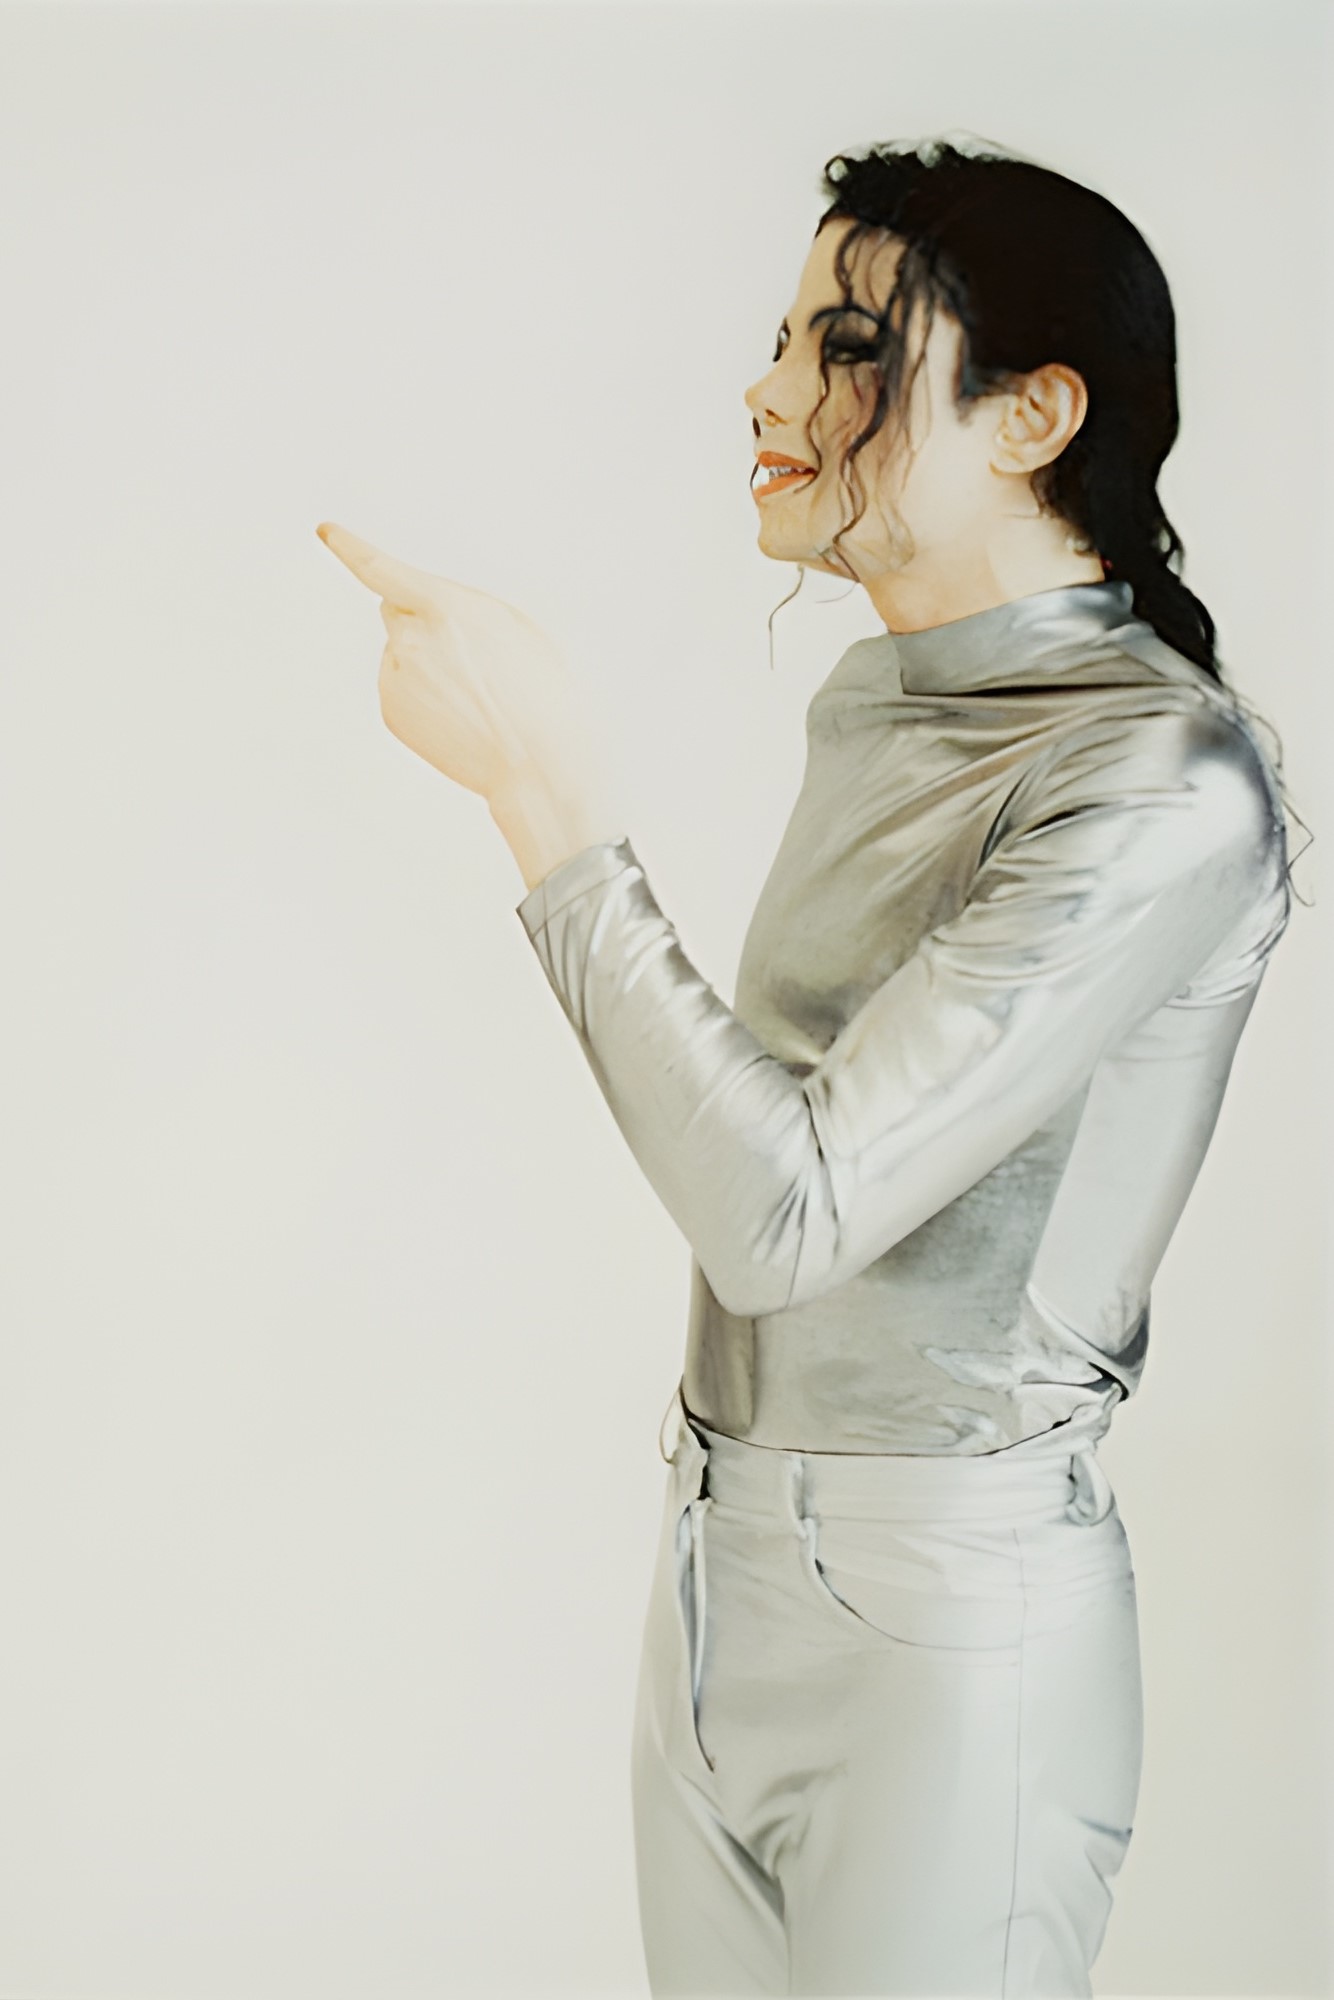 Leave me Alone Jacket - Michael Jackson Video Military Uniform